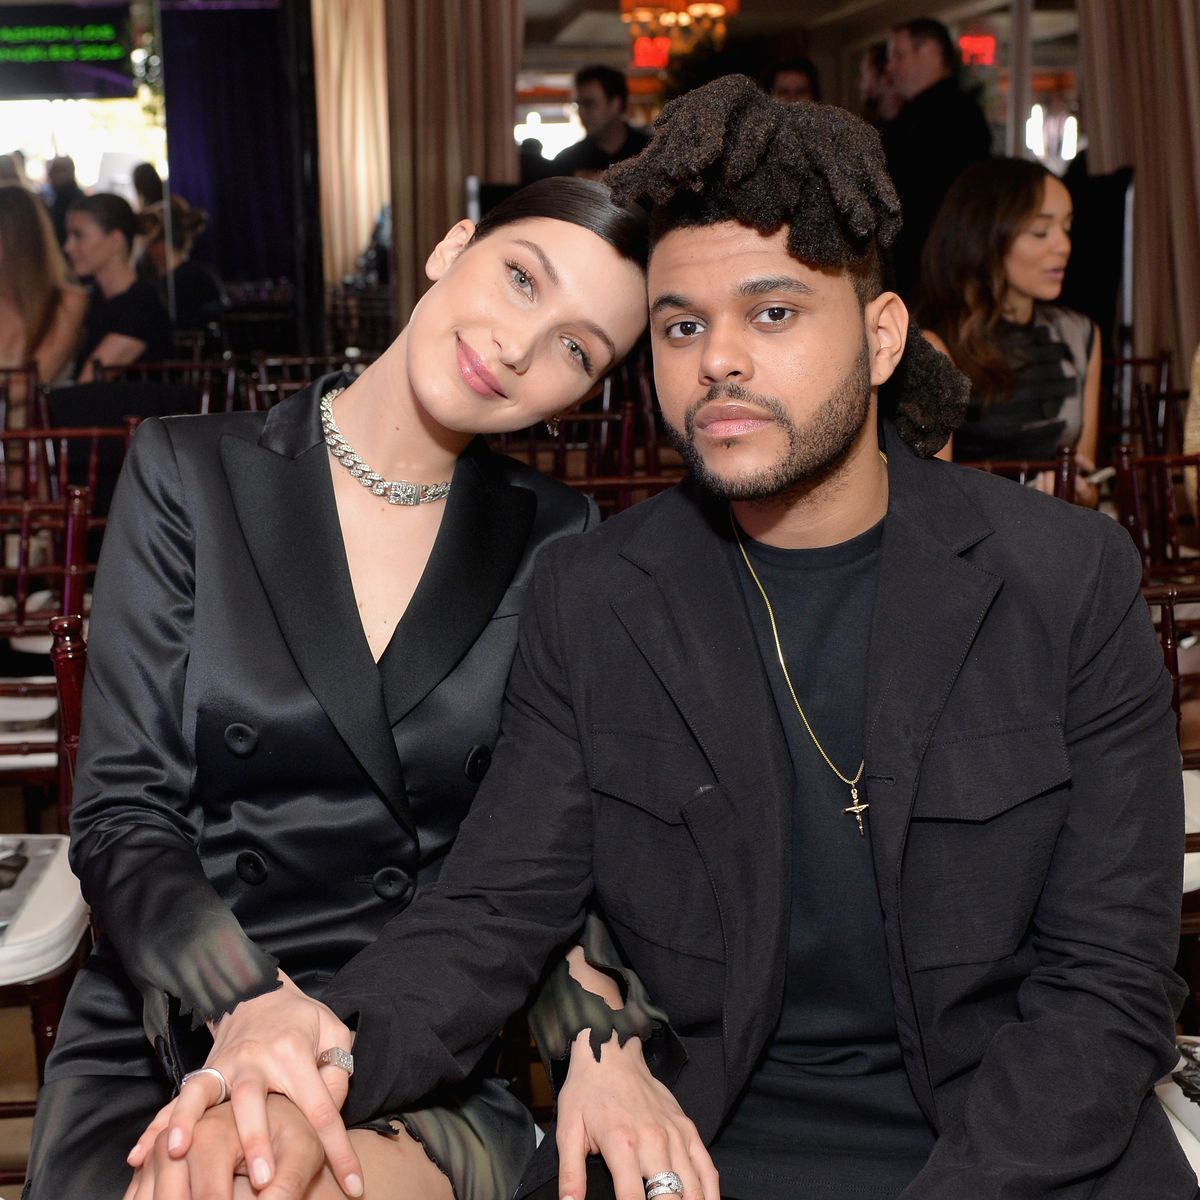 The Weeknd, Bella Hadid Wear Matching Camo for His Birthday: Pics